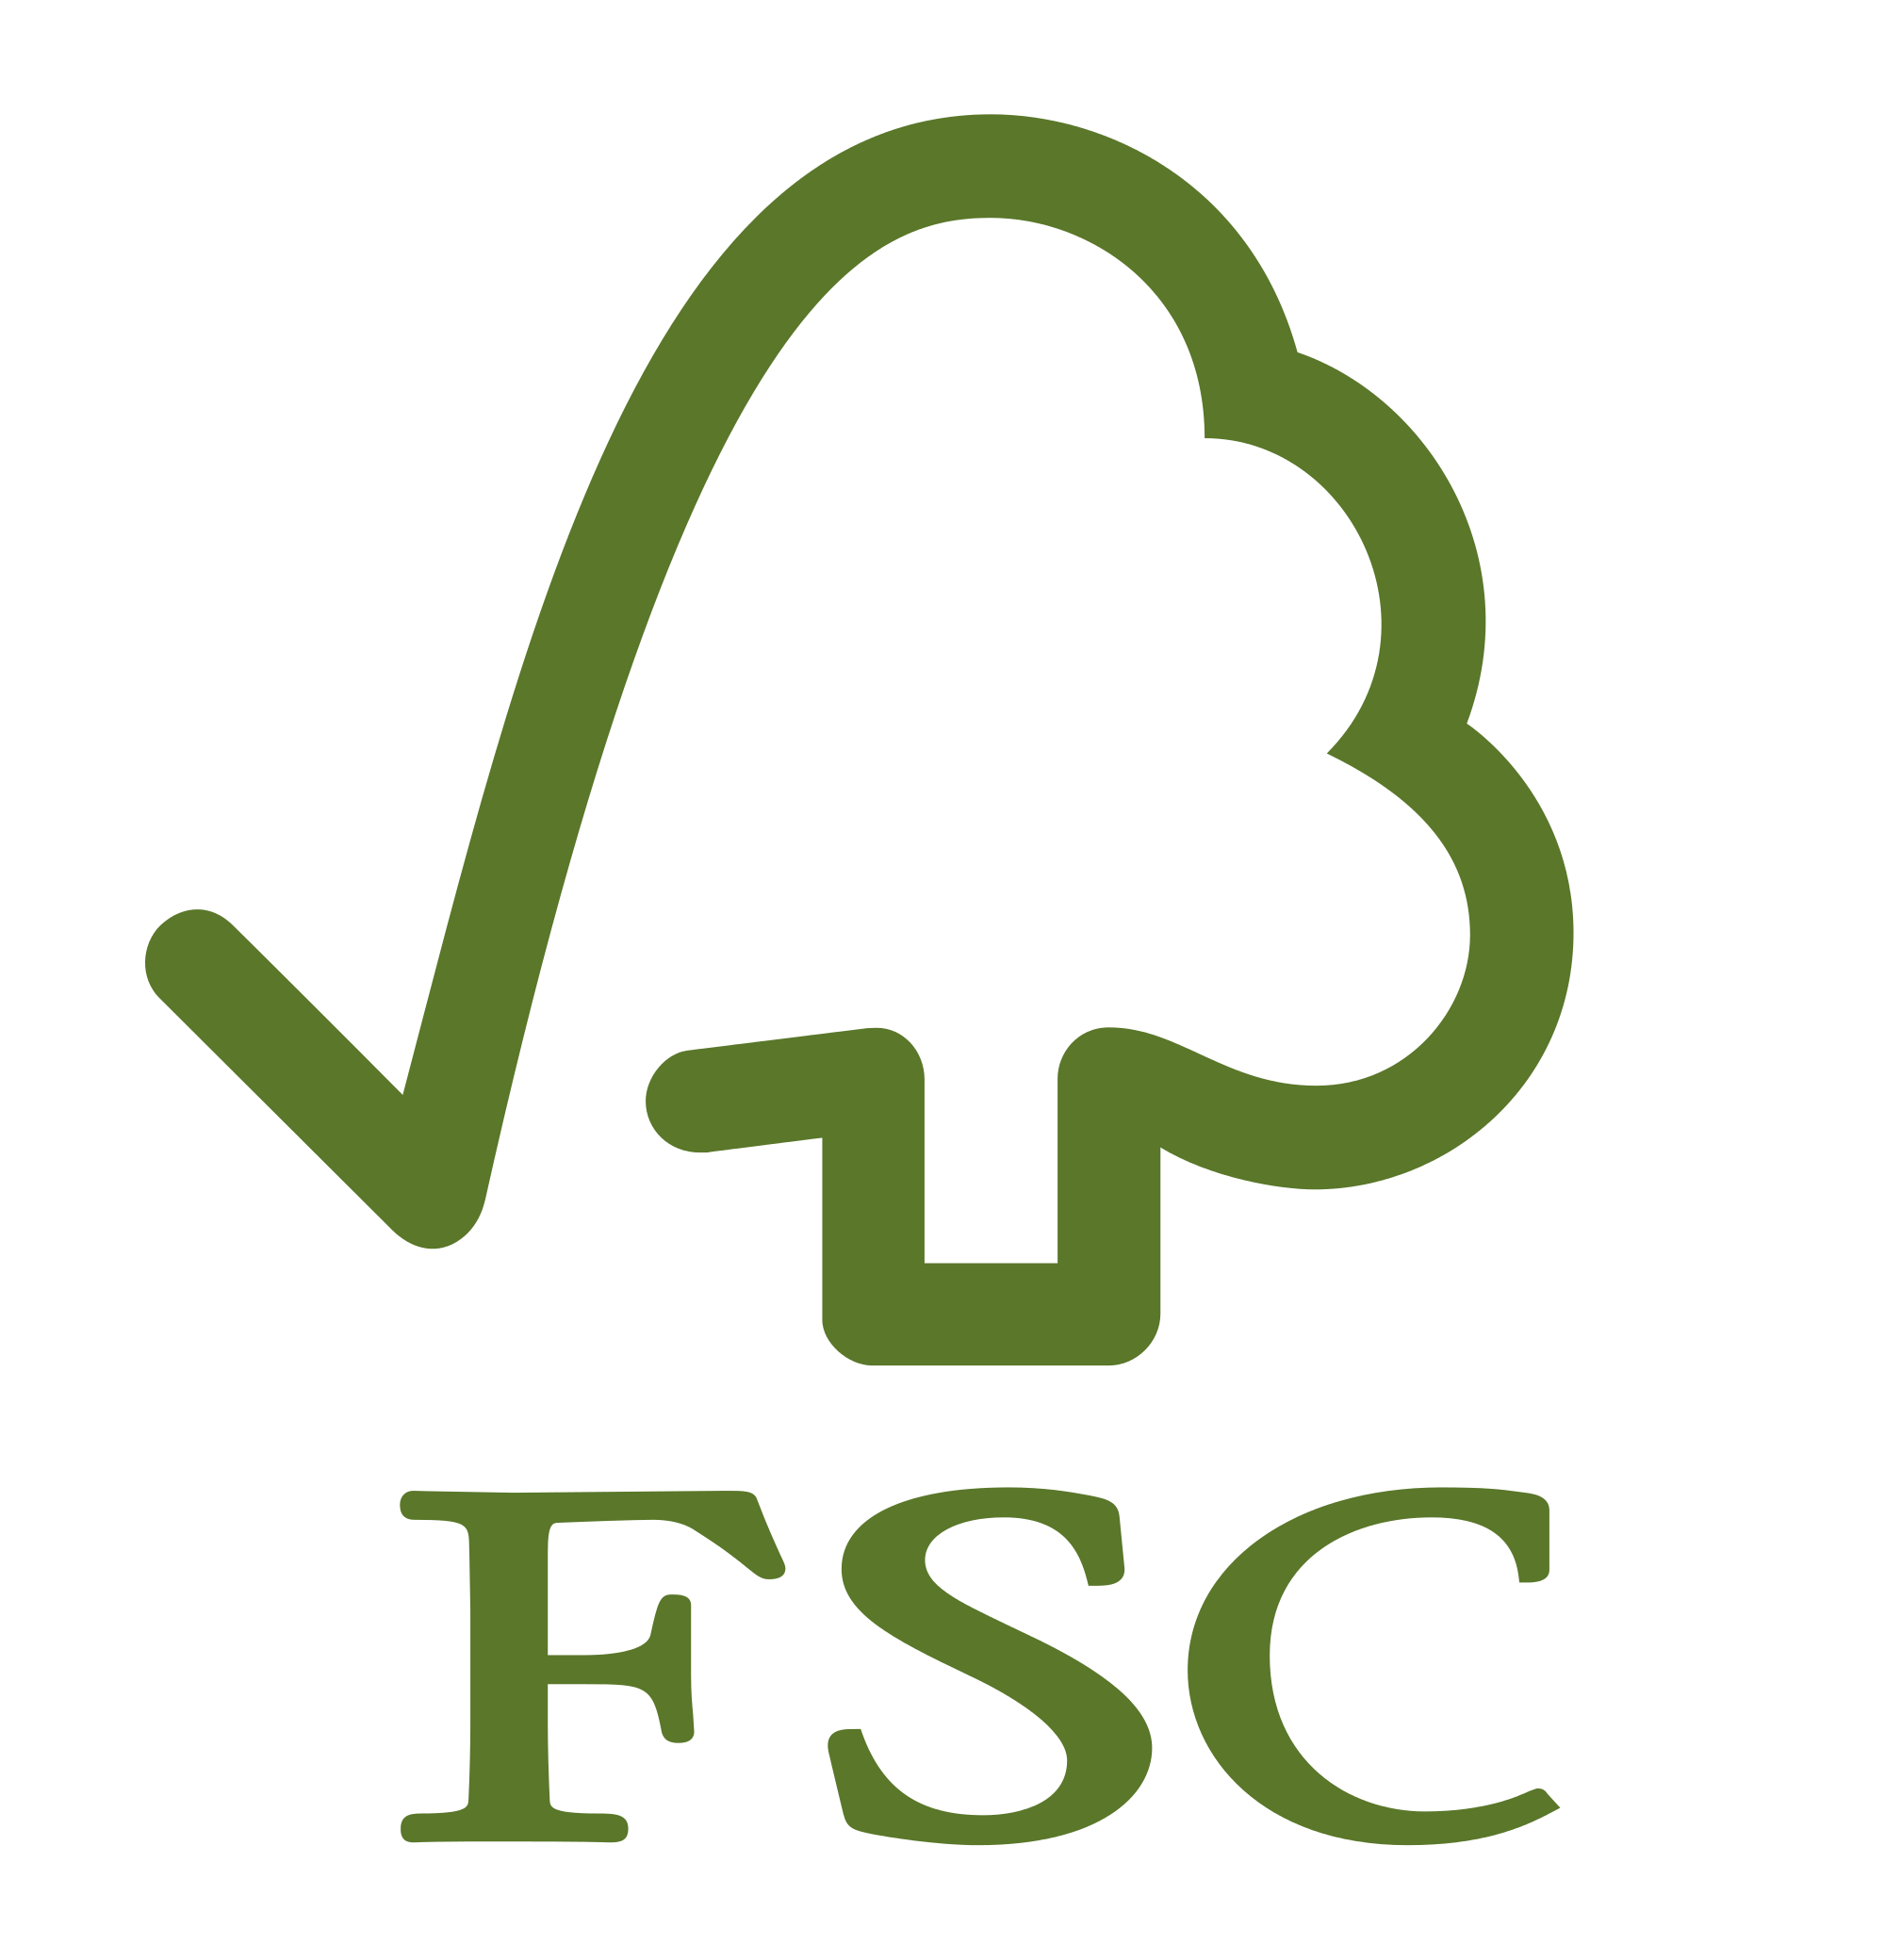 Forest_Stewardship_Council_(l